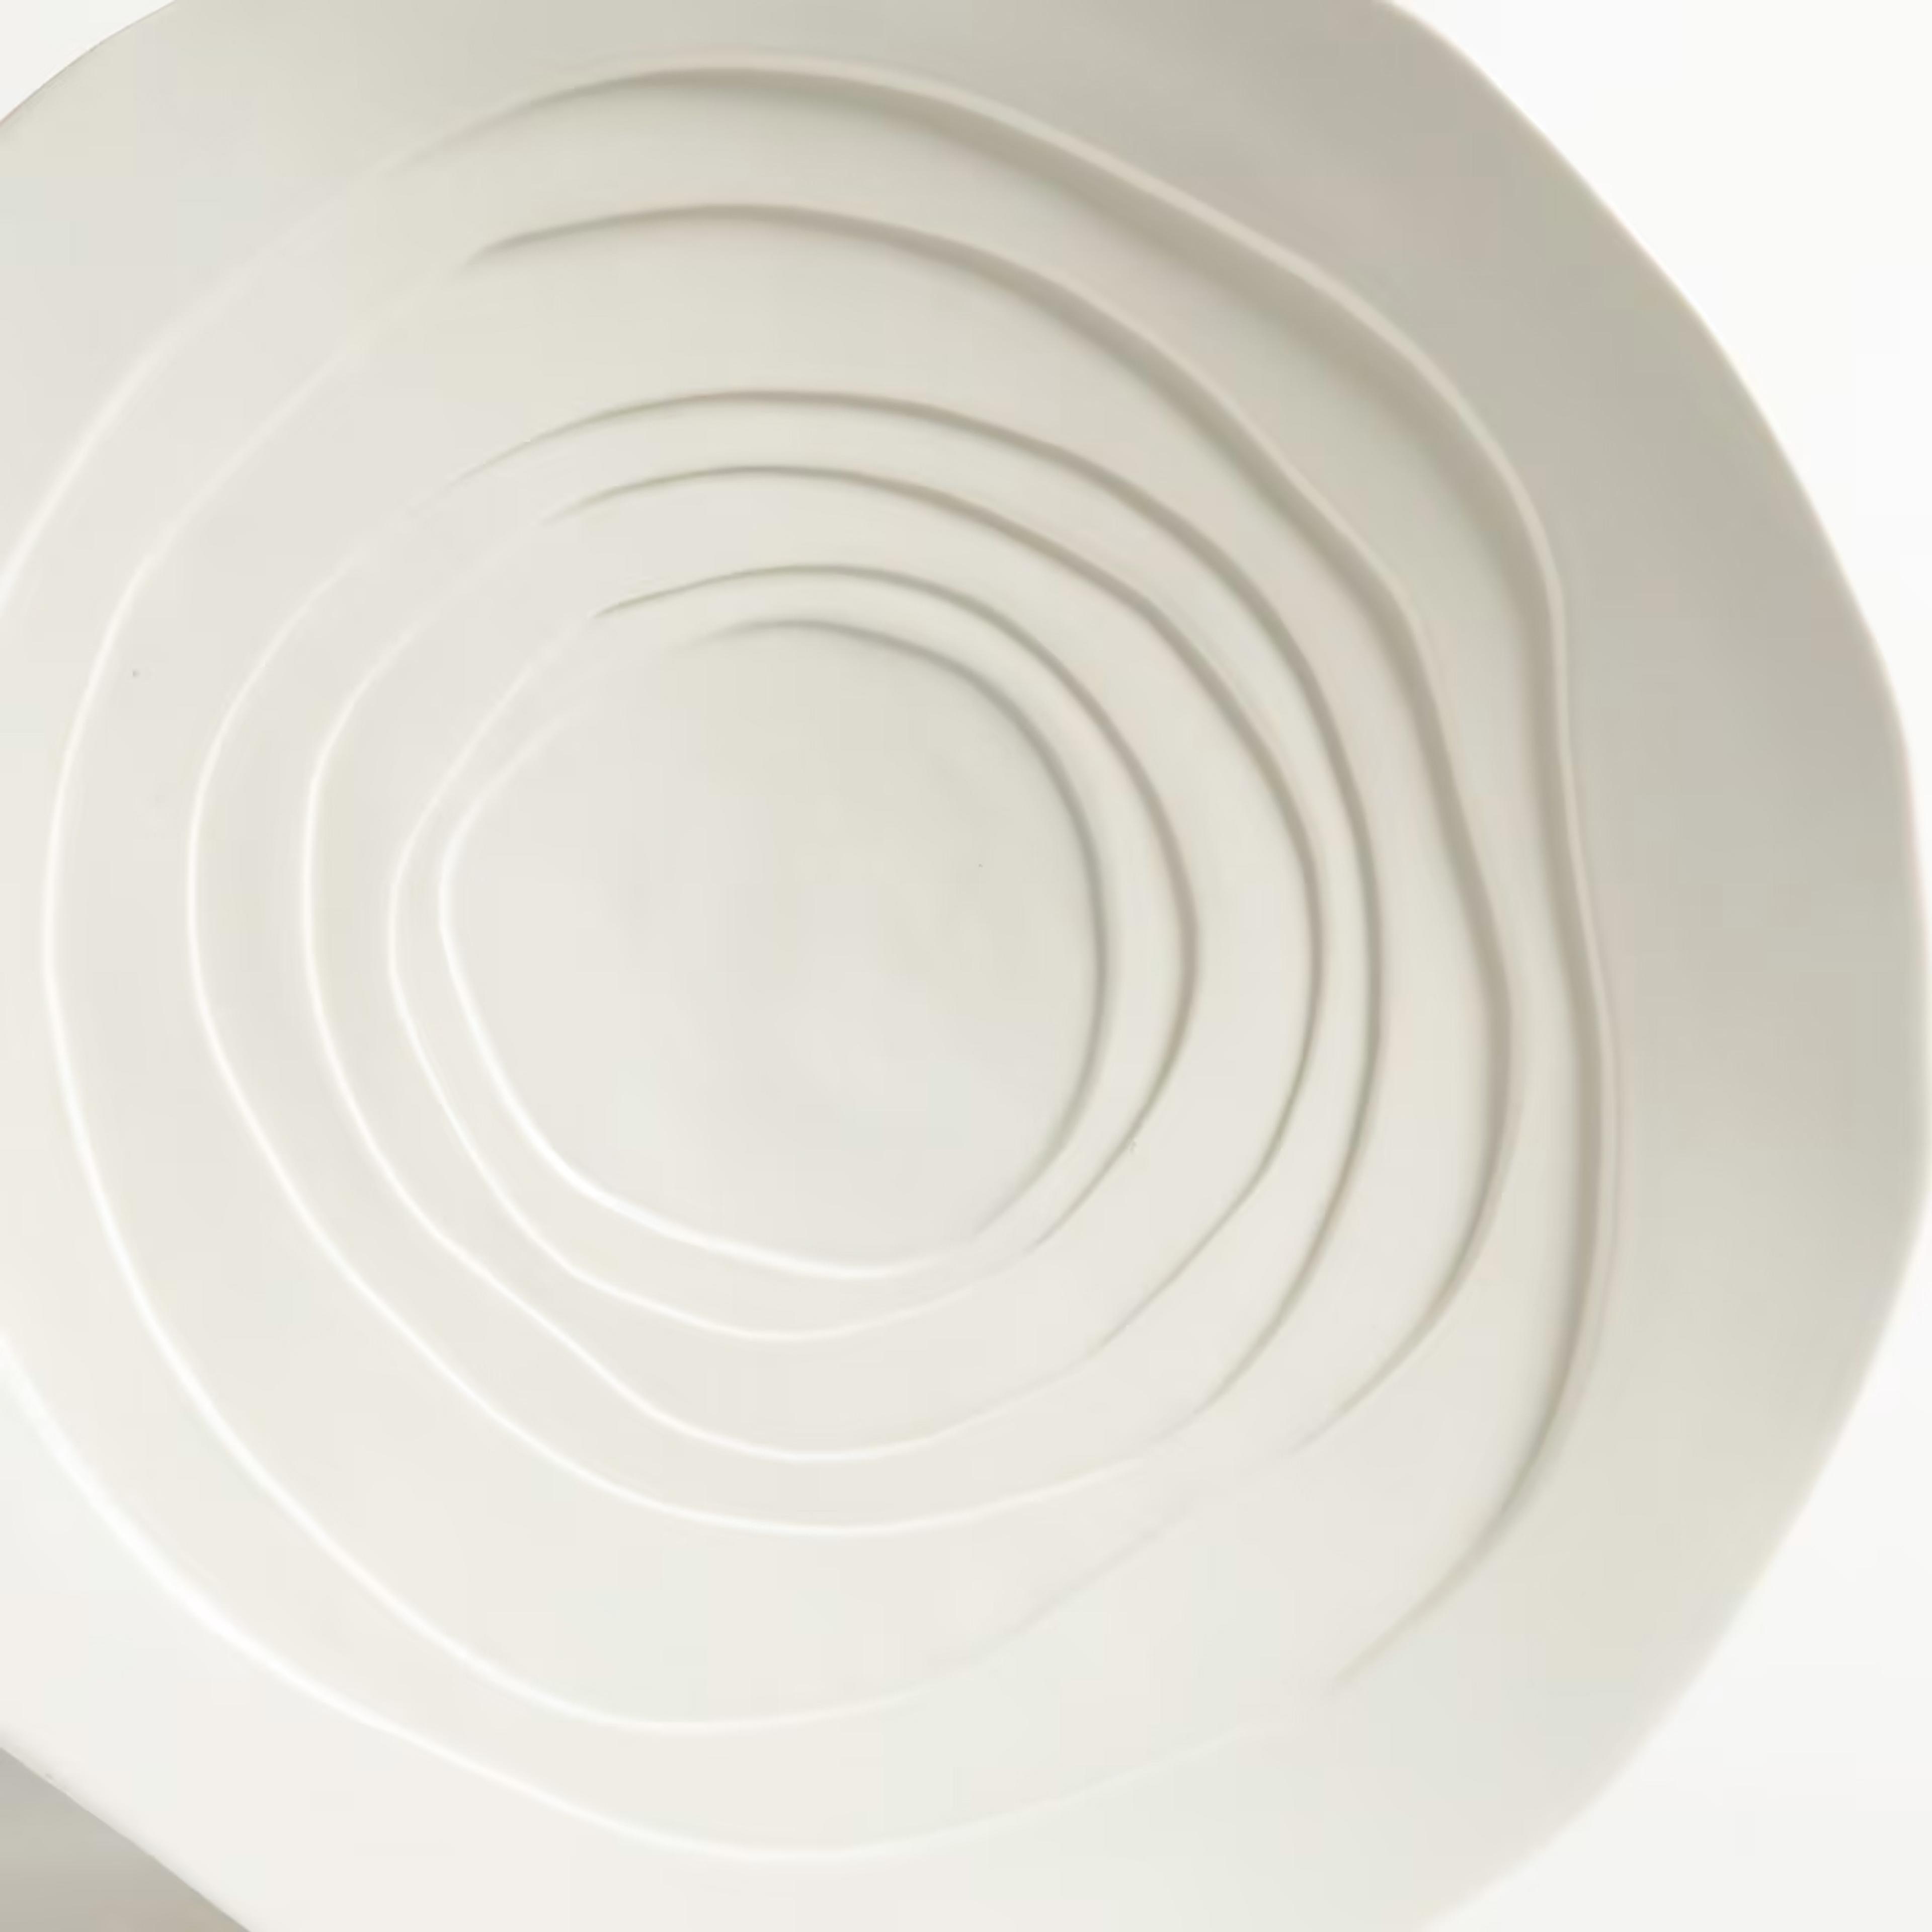 All-White Ceramics